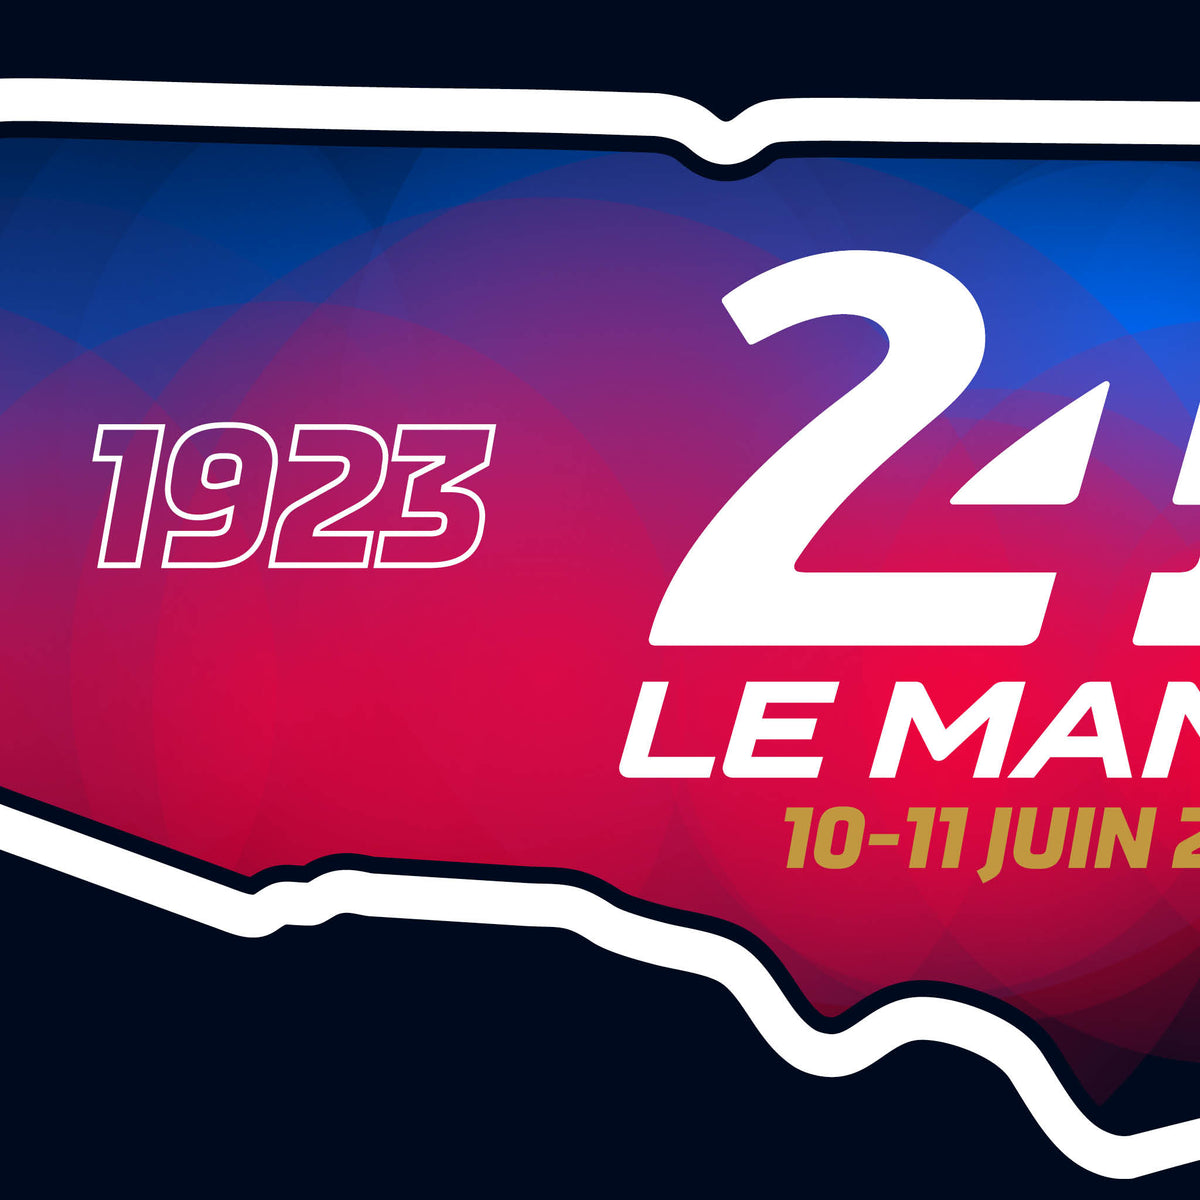 Le Mans 24h Commemorative Year Window Sticker